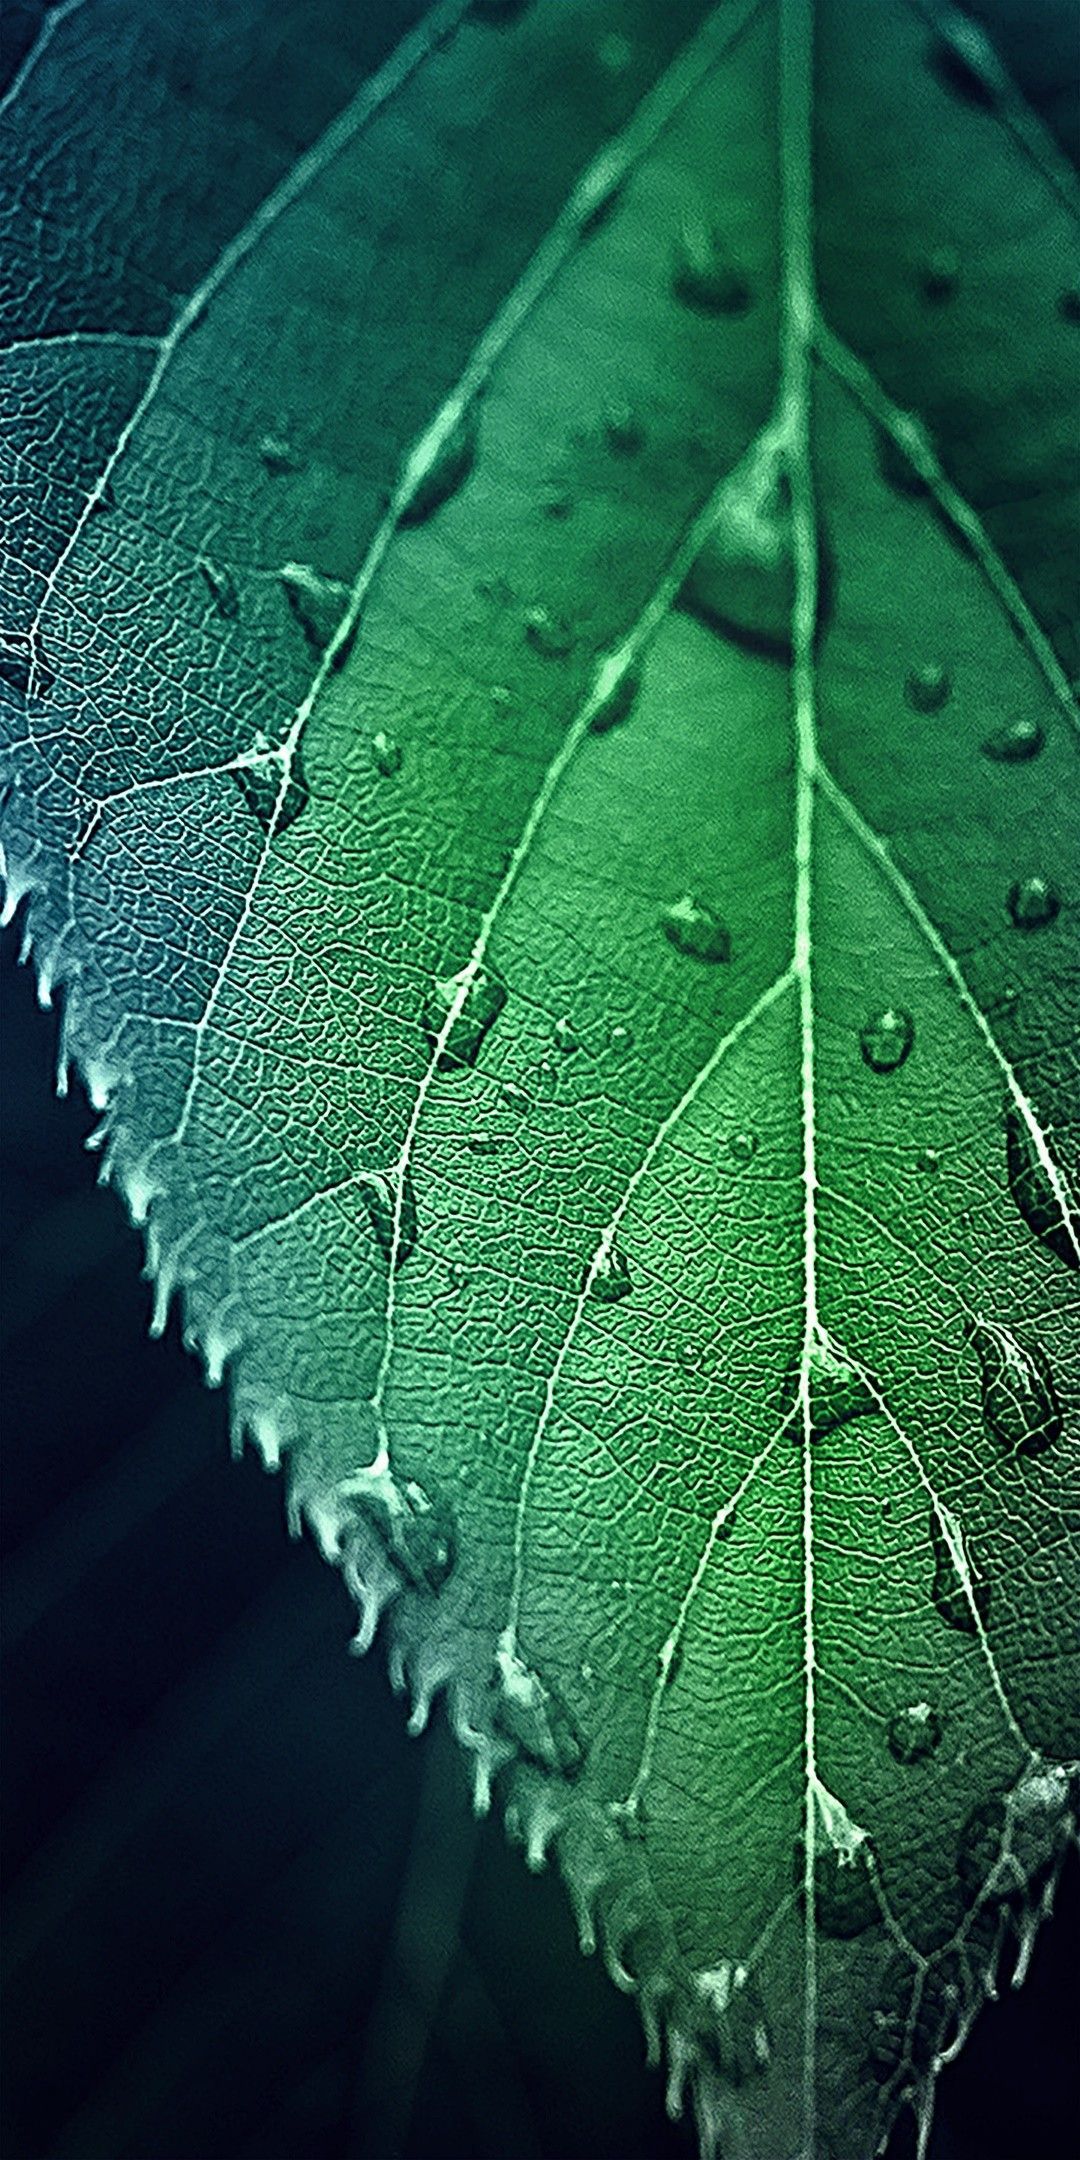 Hd leaf. New nature wallpaper, Leaf photography, Phone wallpaper